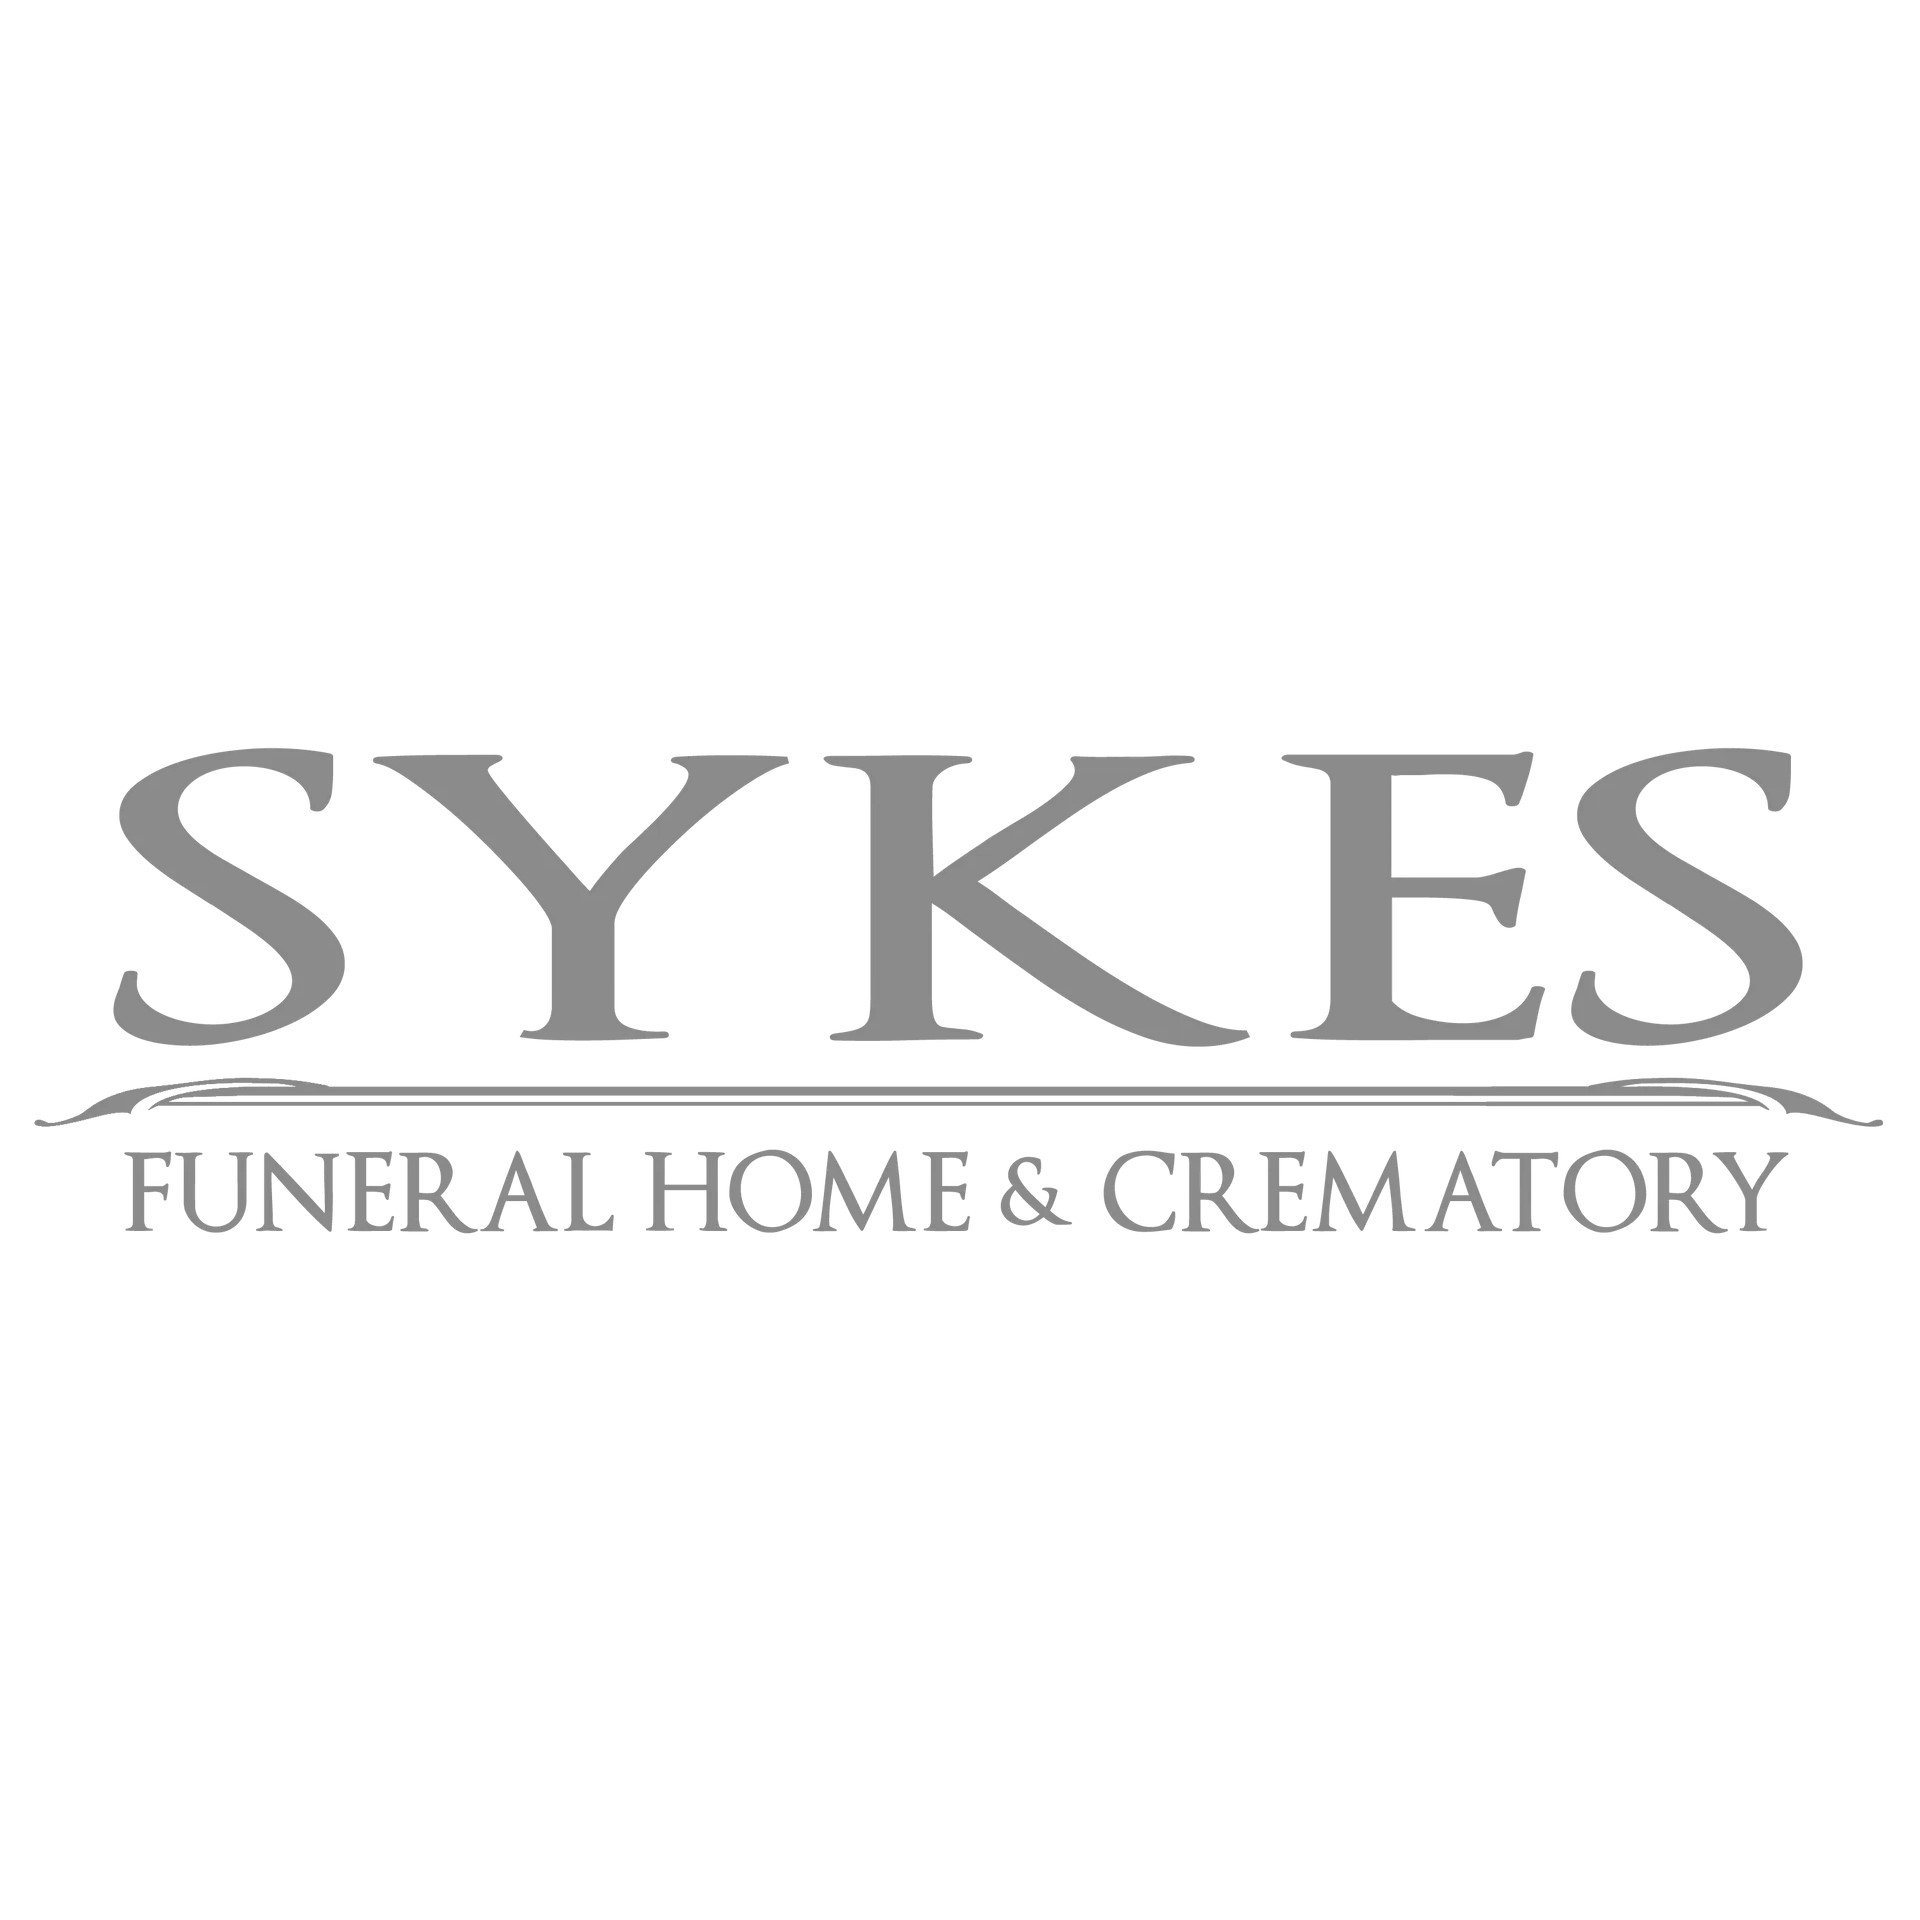 sykes funeral home & crematory | funeral directors in clarksville